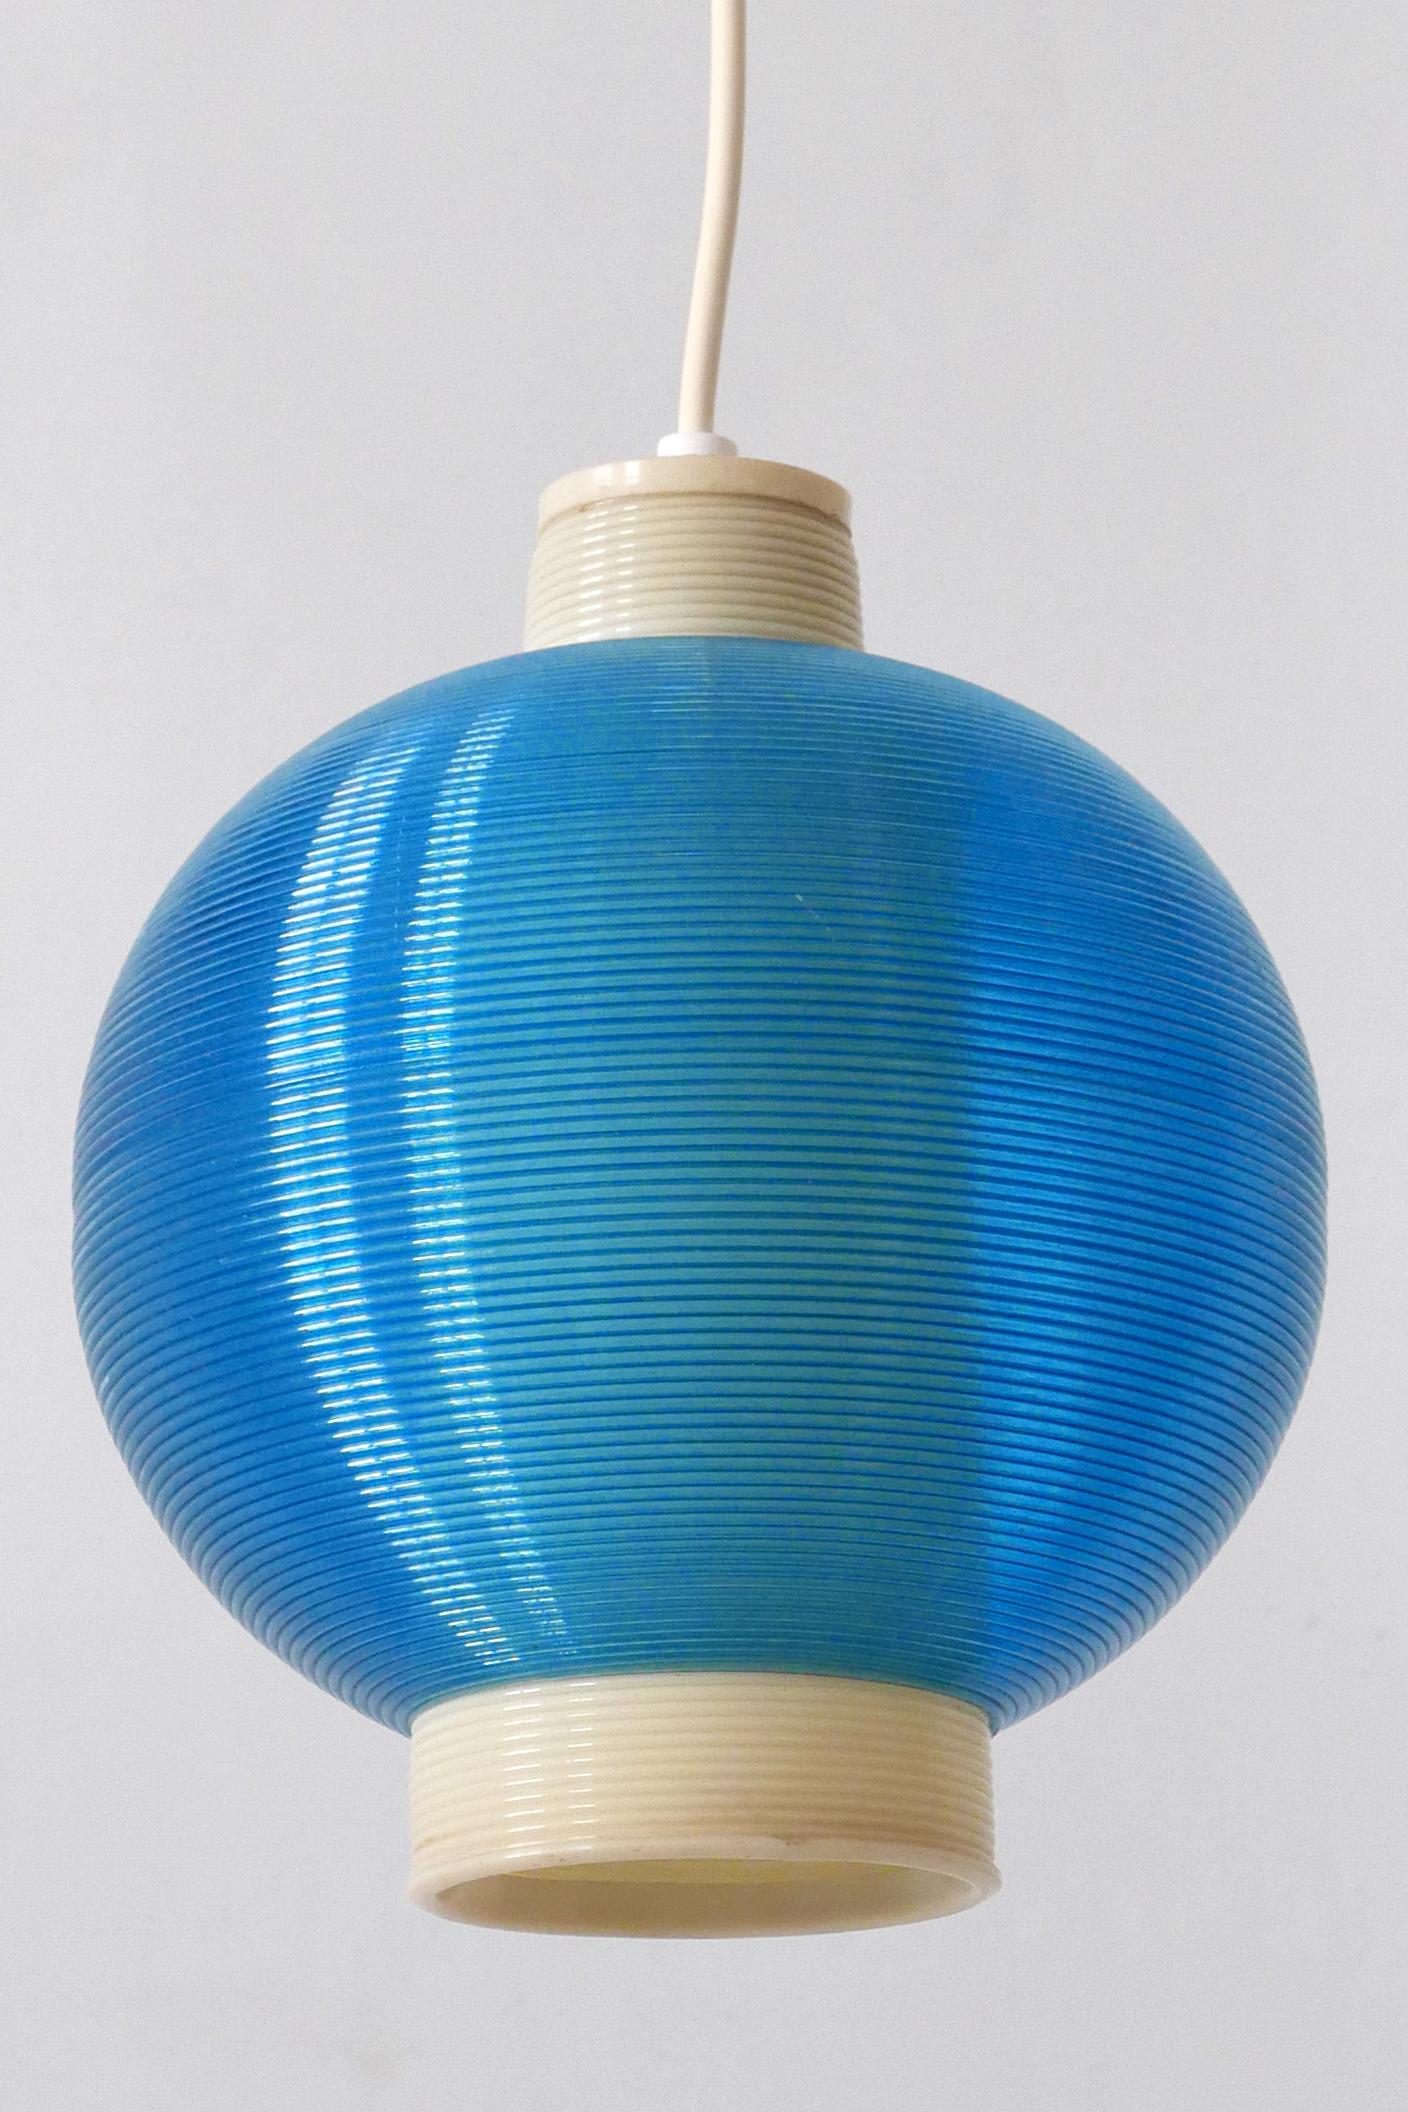 Rare Mid-Century Modern Rotaflex Pendant Lamp by Yasha Heifetz USA 1960s For Sale 6